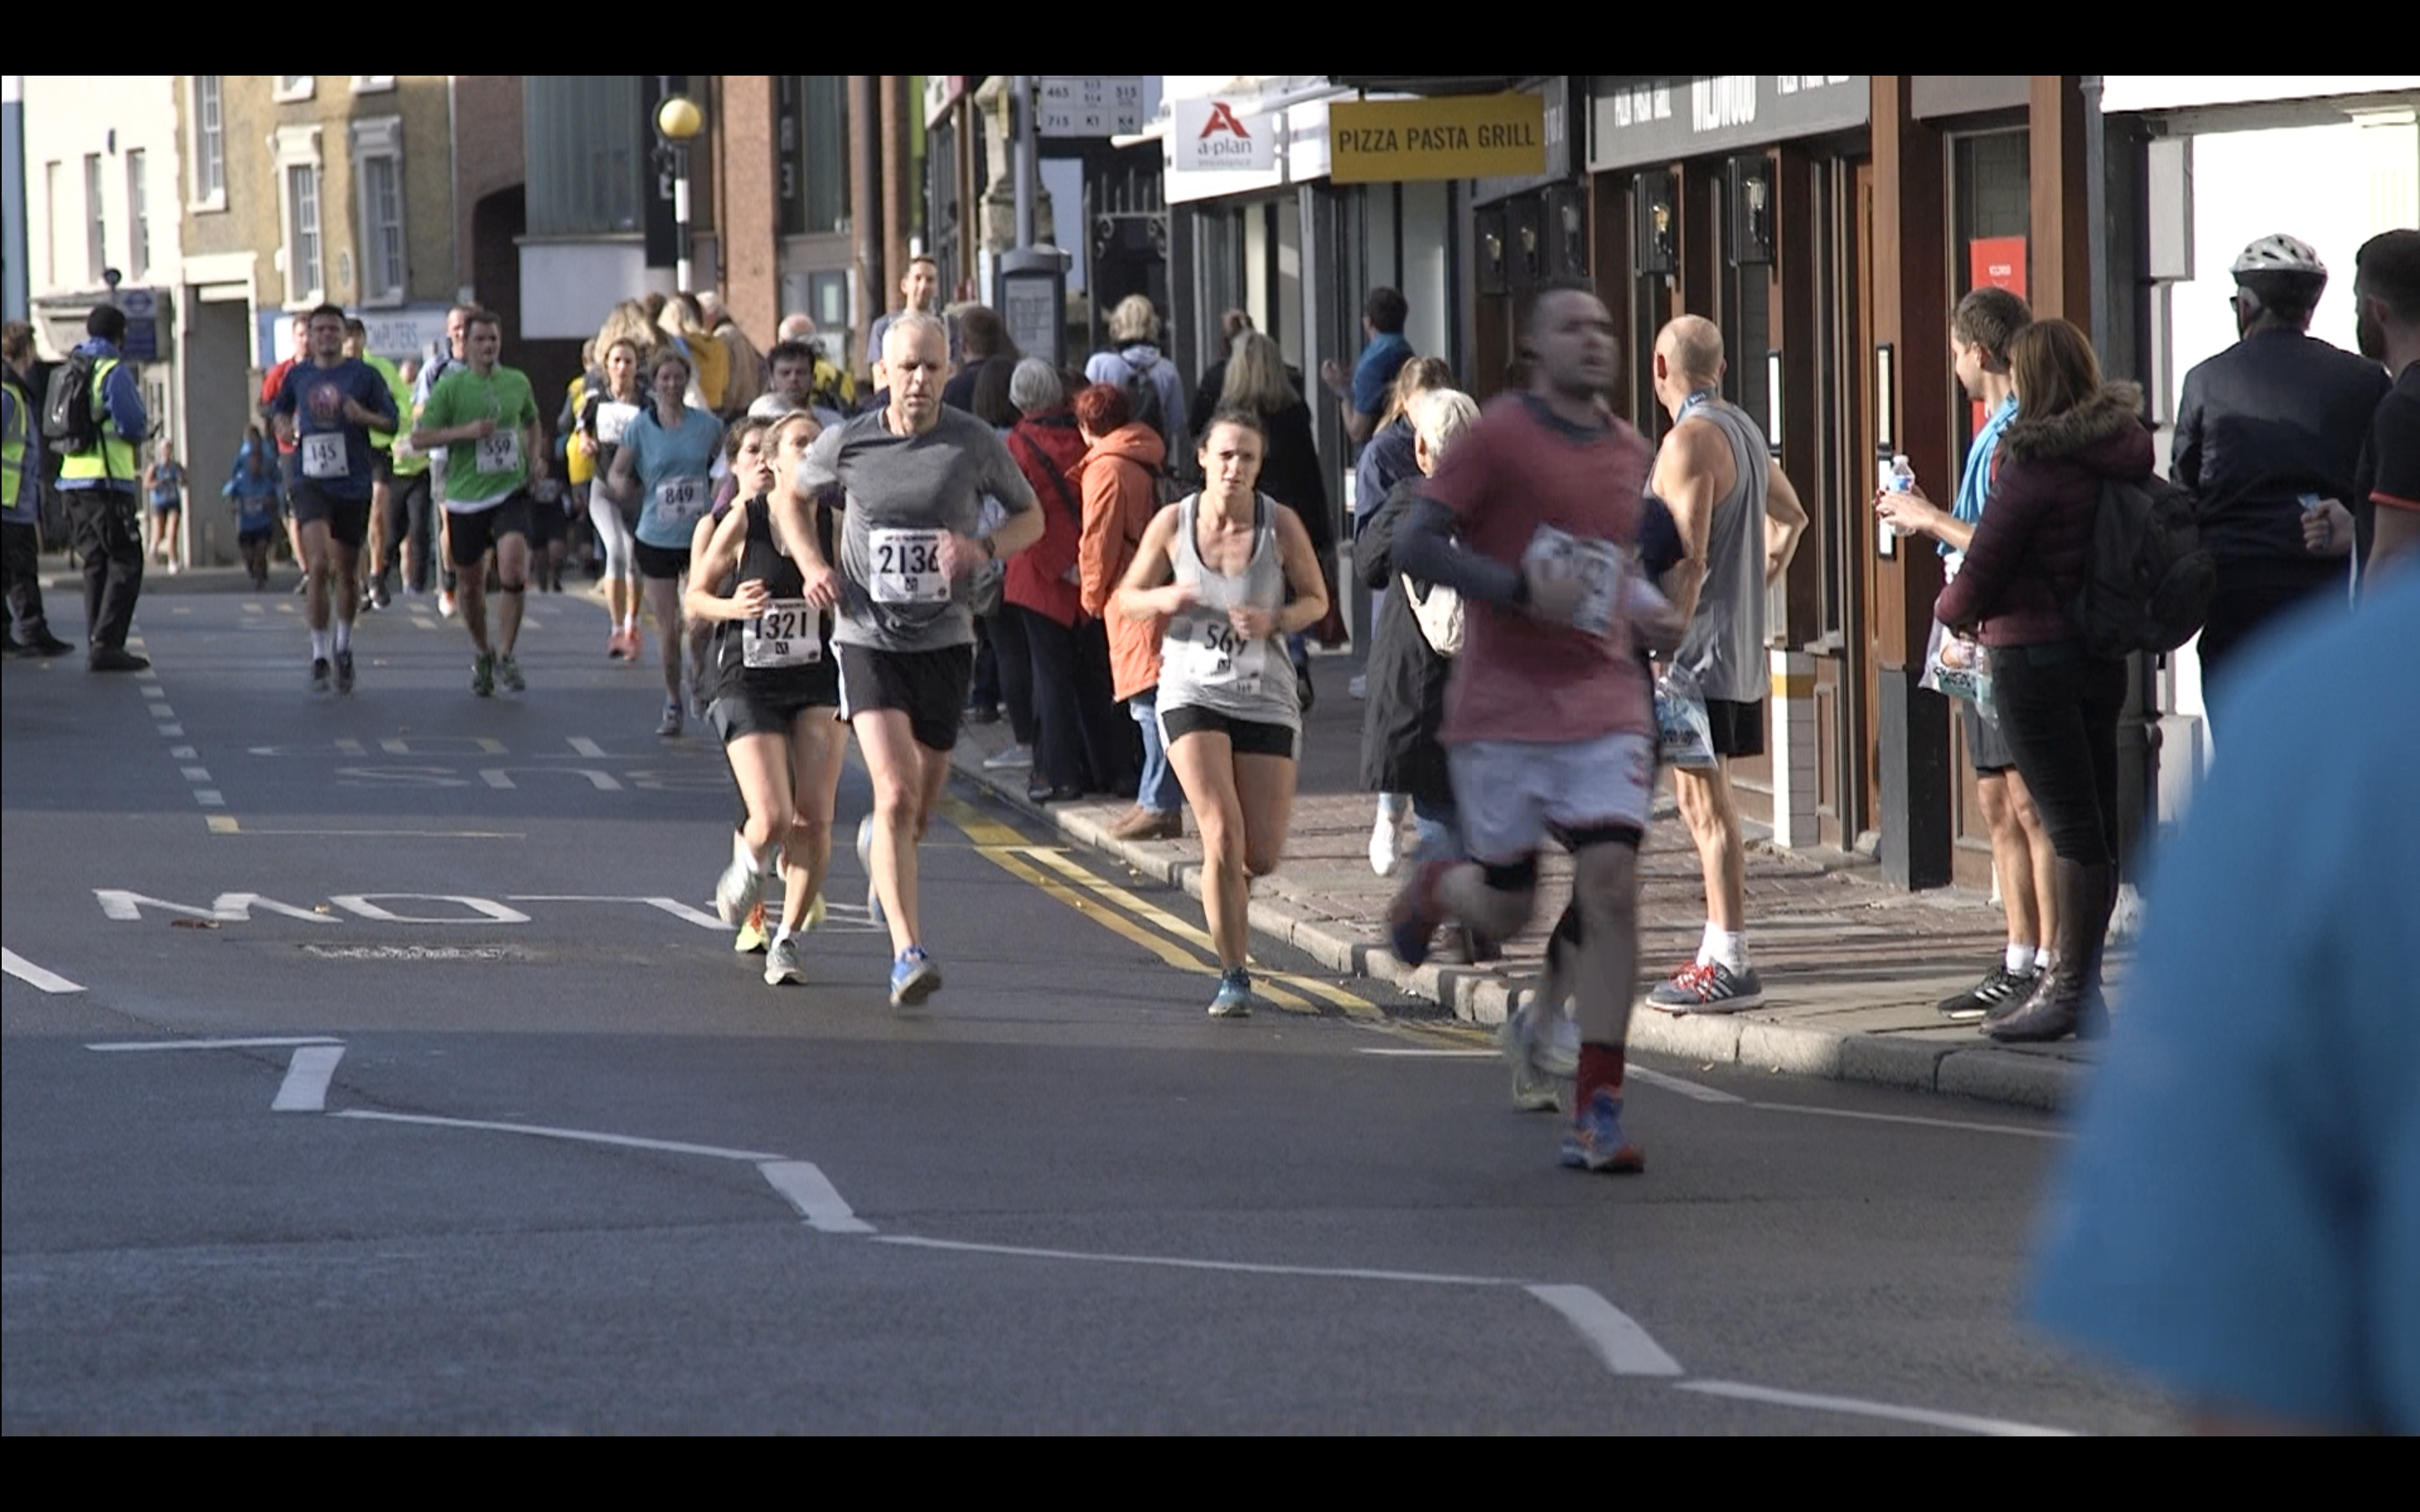 Runners pound pavement at Kingston half marathon